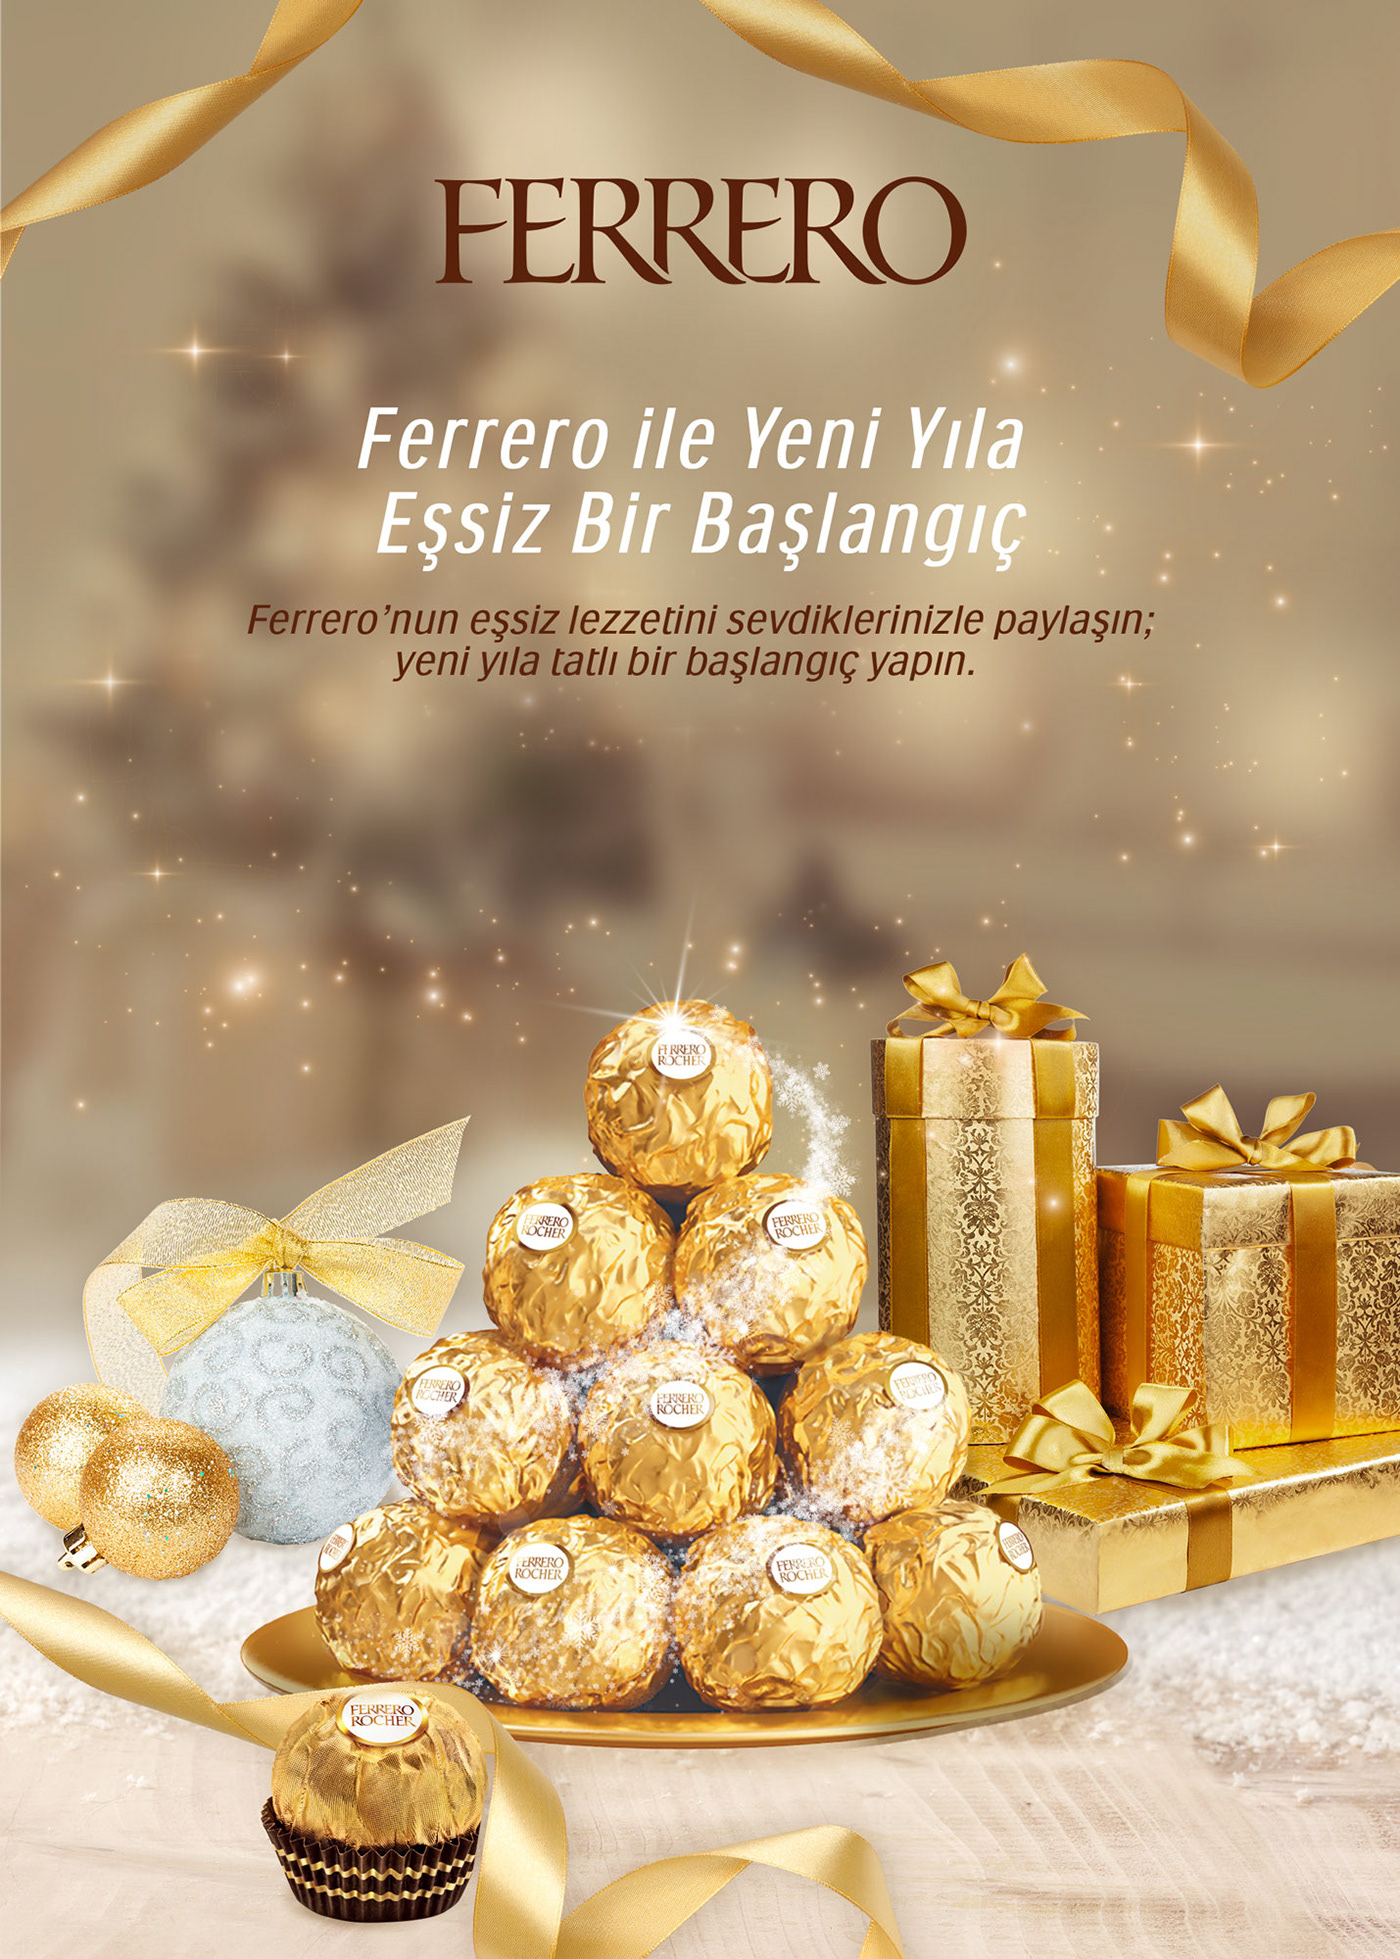 Promotion ferrero ferrero rocher rafaello new years Christmas instore chocolate Gift With Purchase